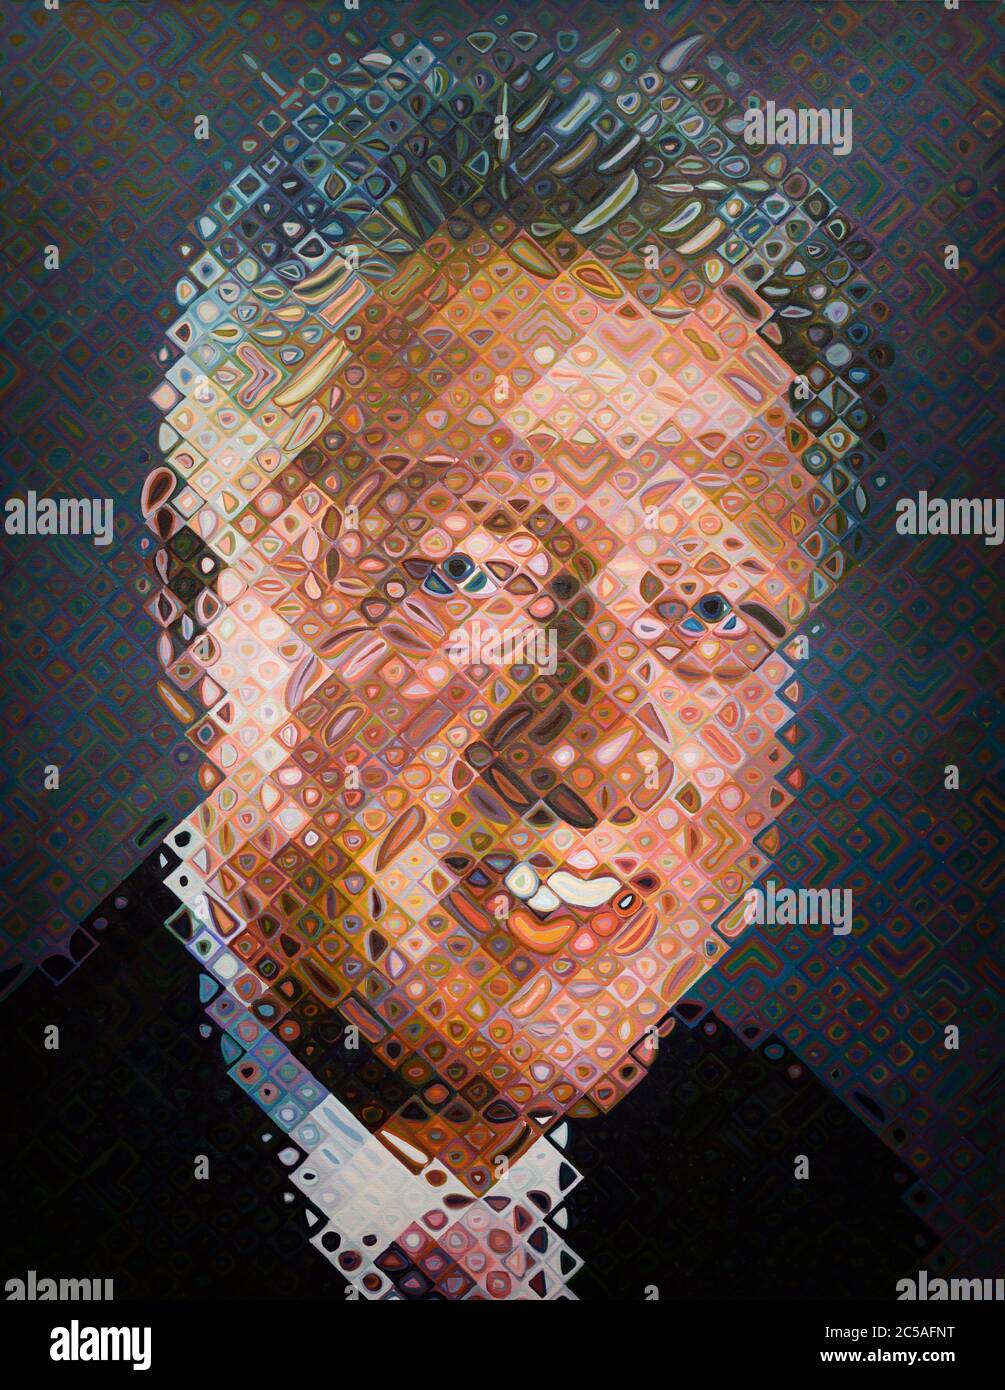 Bill Clinton portrait by Chuck Close 2006 Stock Photo